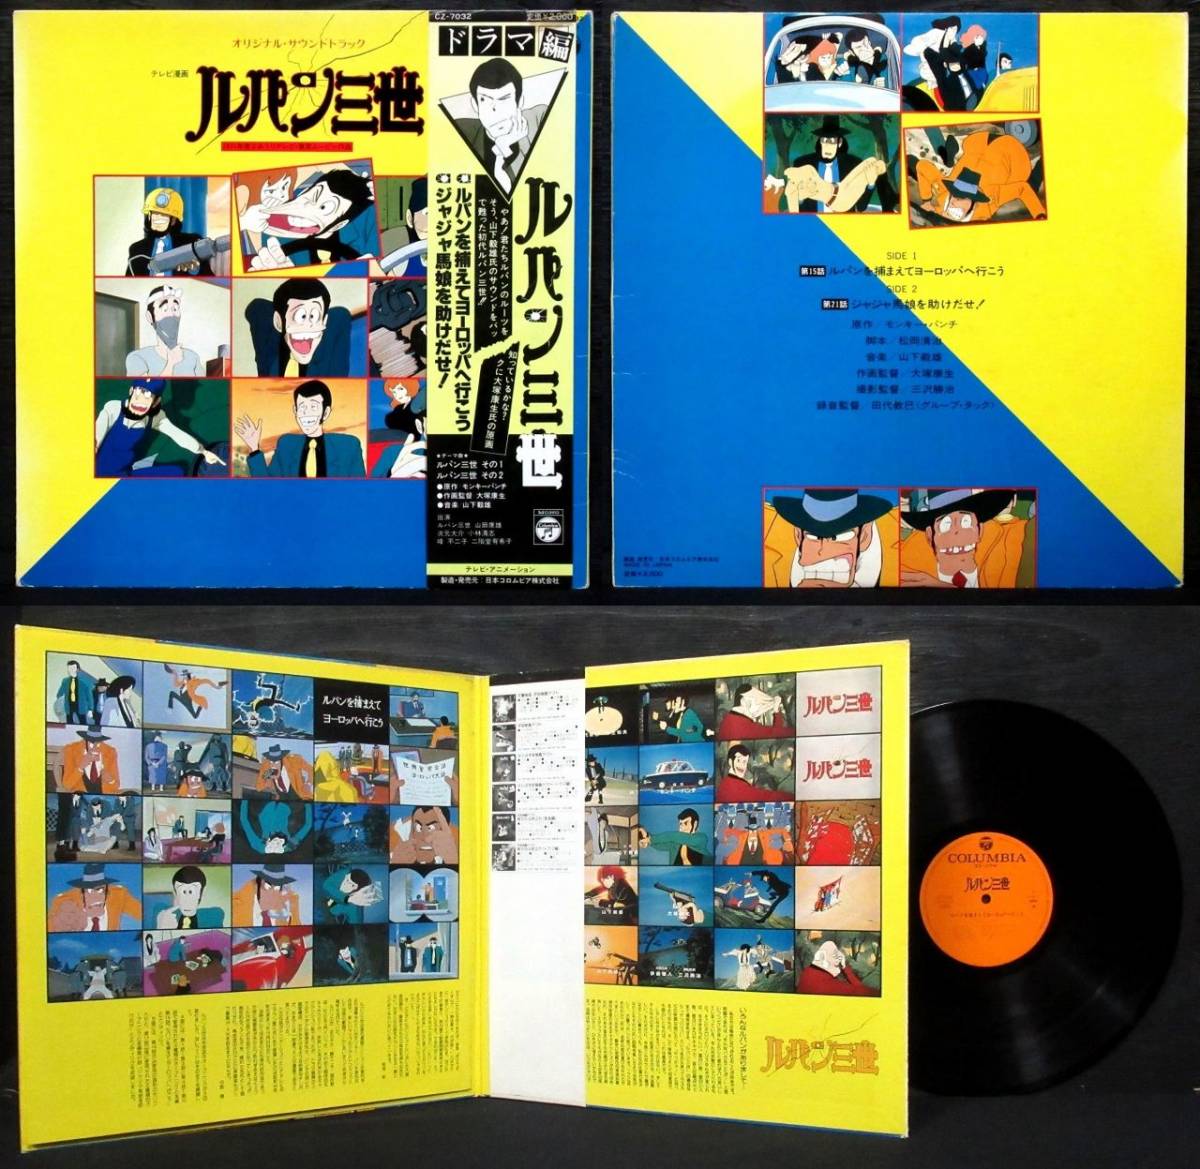 [ Lupin III LP запись 4 название ]*Lupin the 3rd. Lupin the Third. Monkey * дырокол. Oono самец 2. Miyazaki .